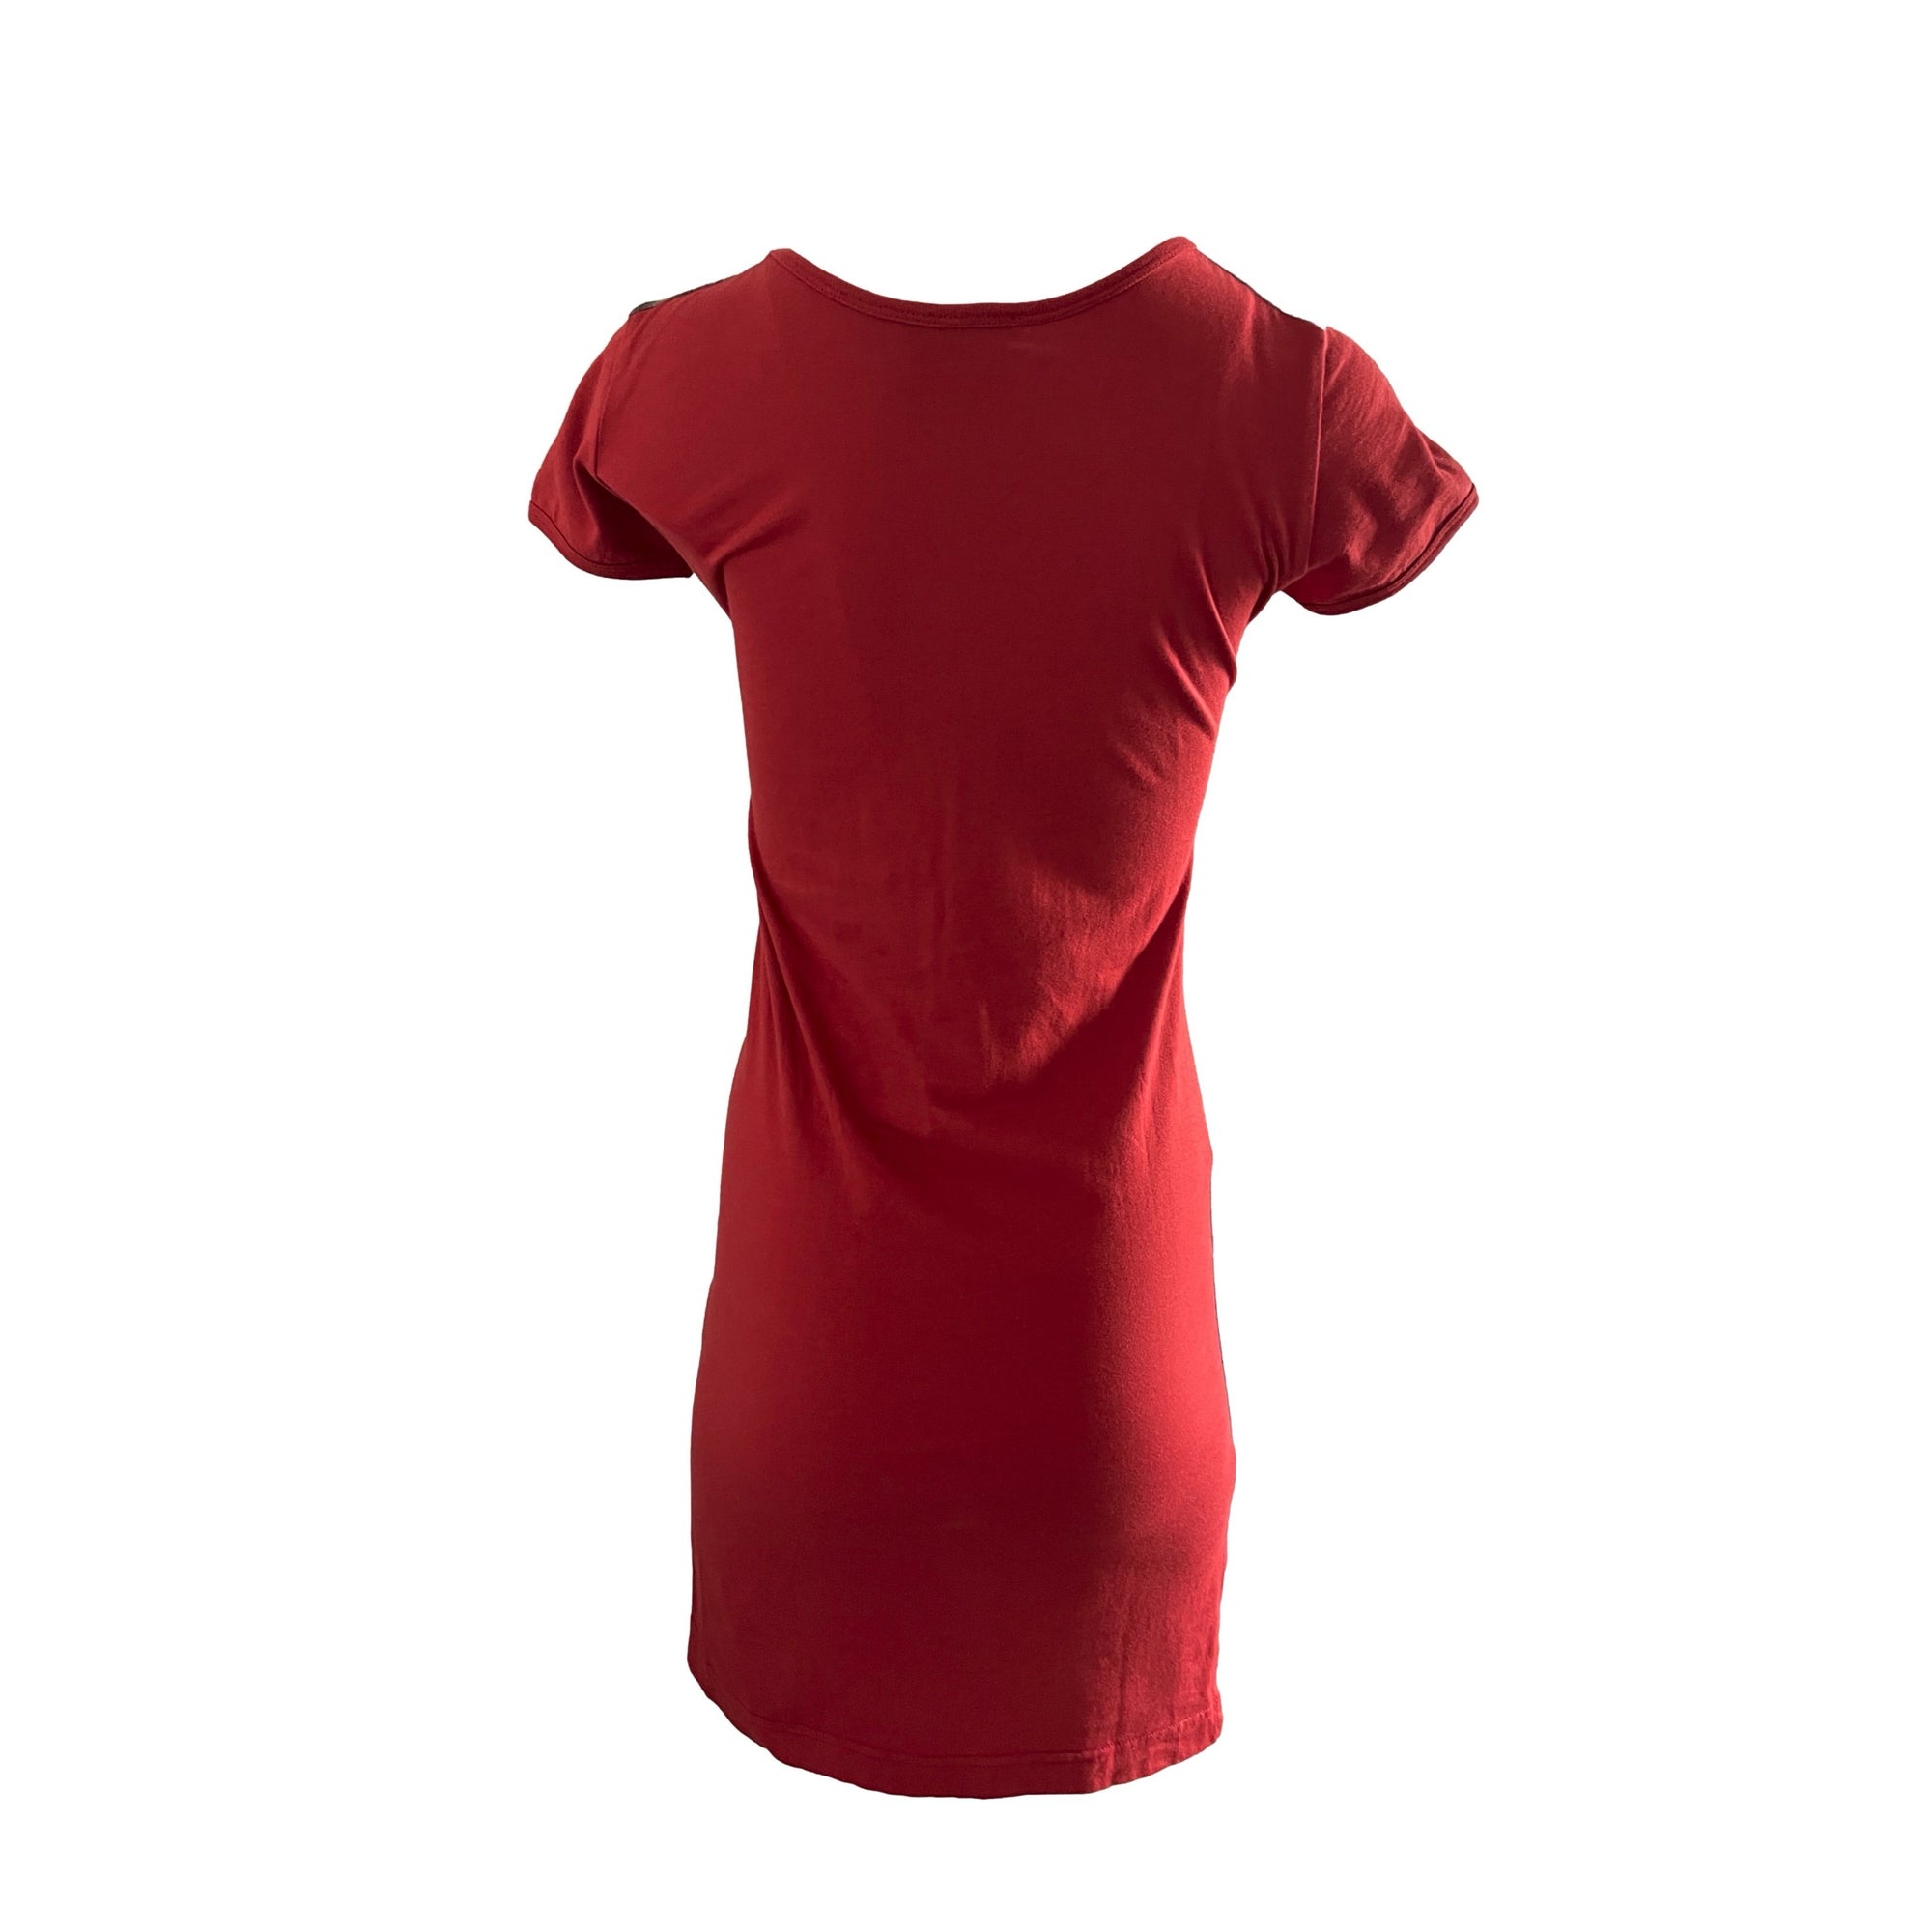 Vivienne Westwood Red Cherub Dress - Apparel